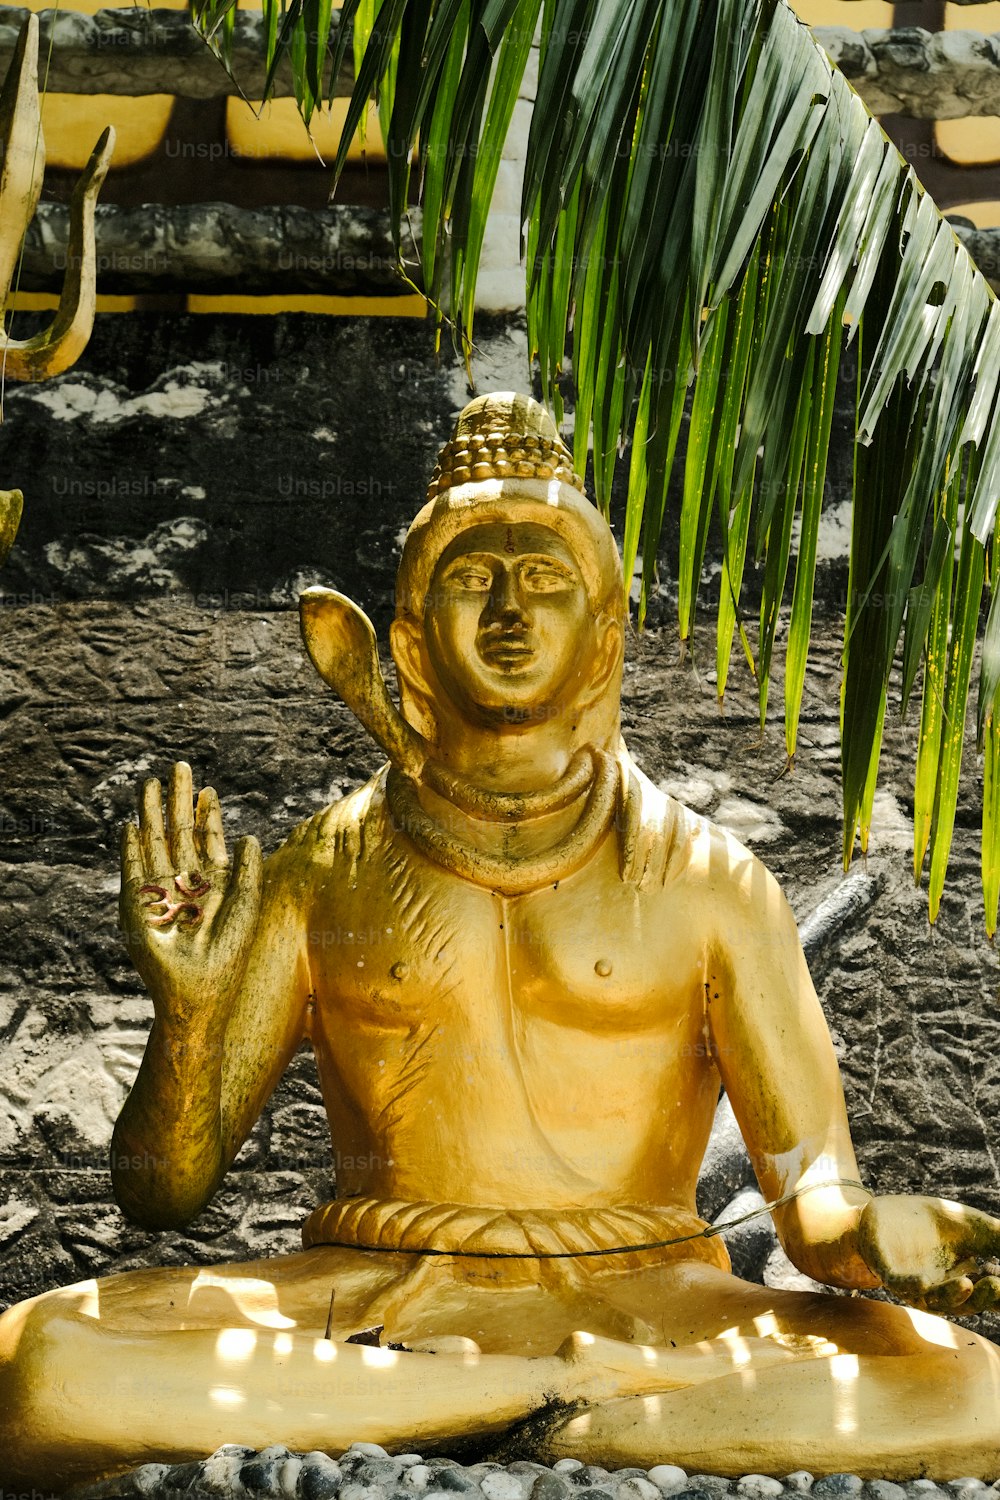 a golden buddha statue sitting under a palm tree